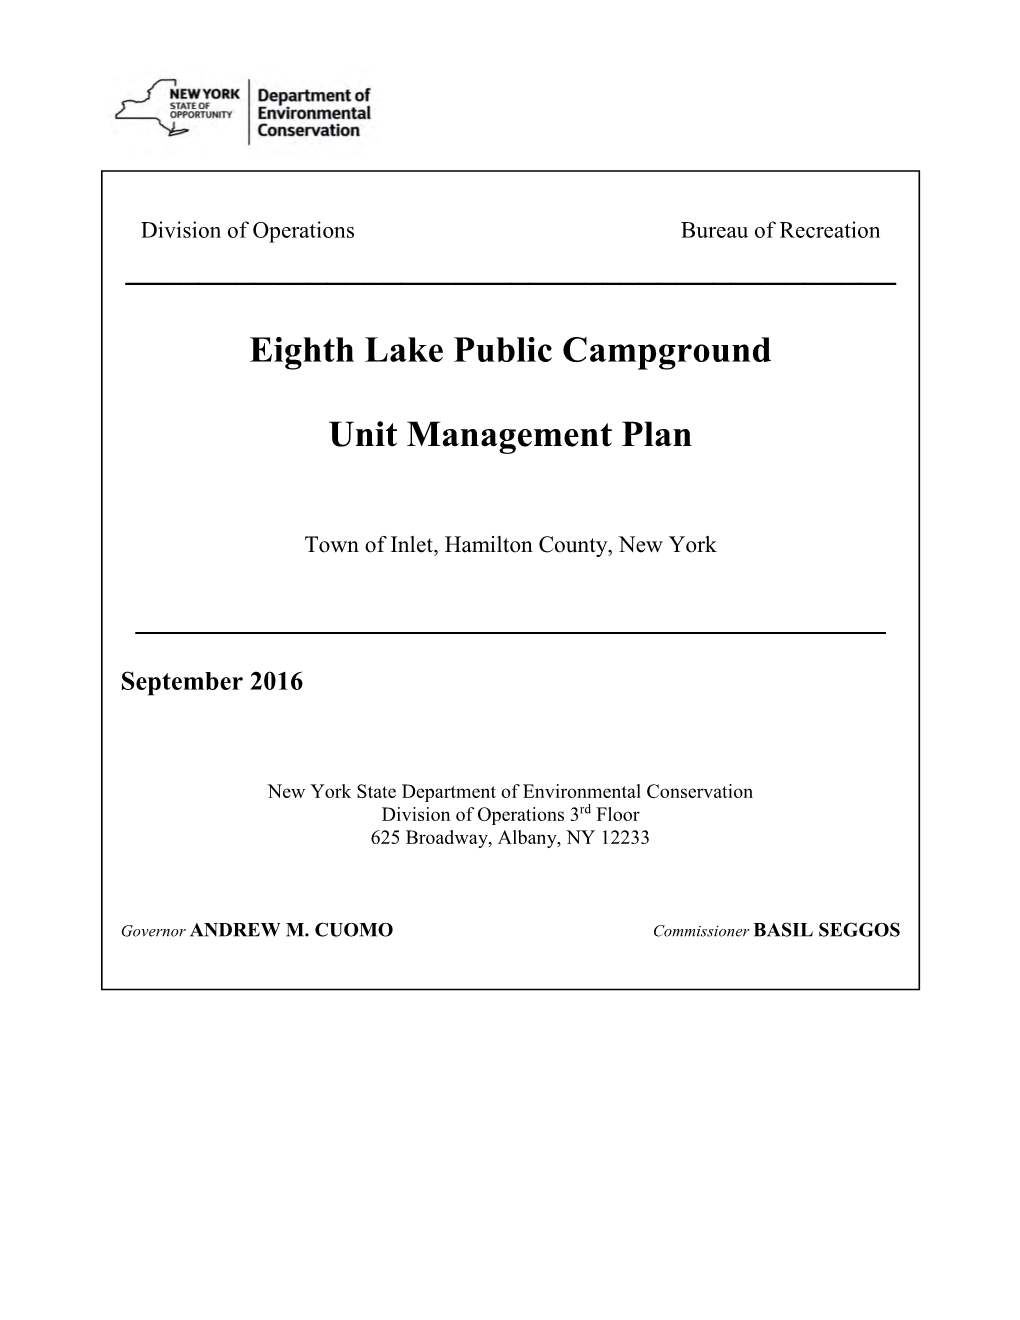 Eighth Lake Public Campground Unit Management Plan